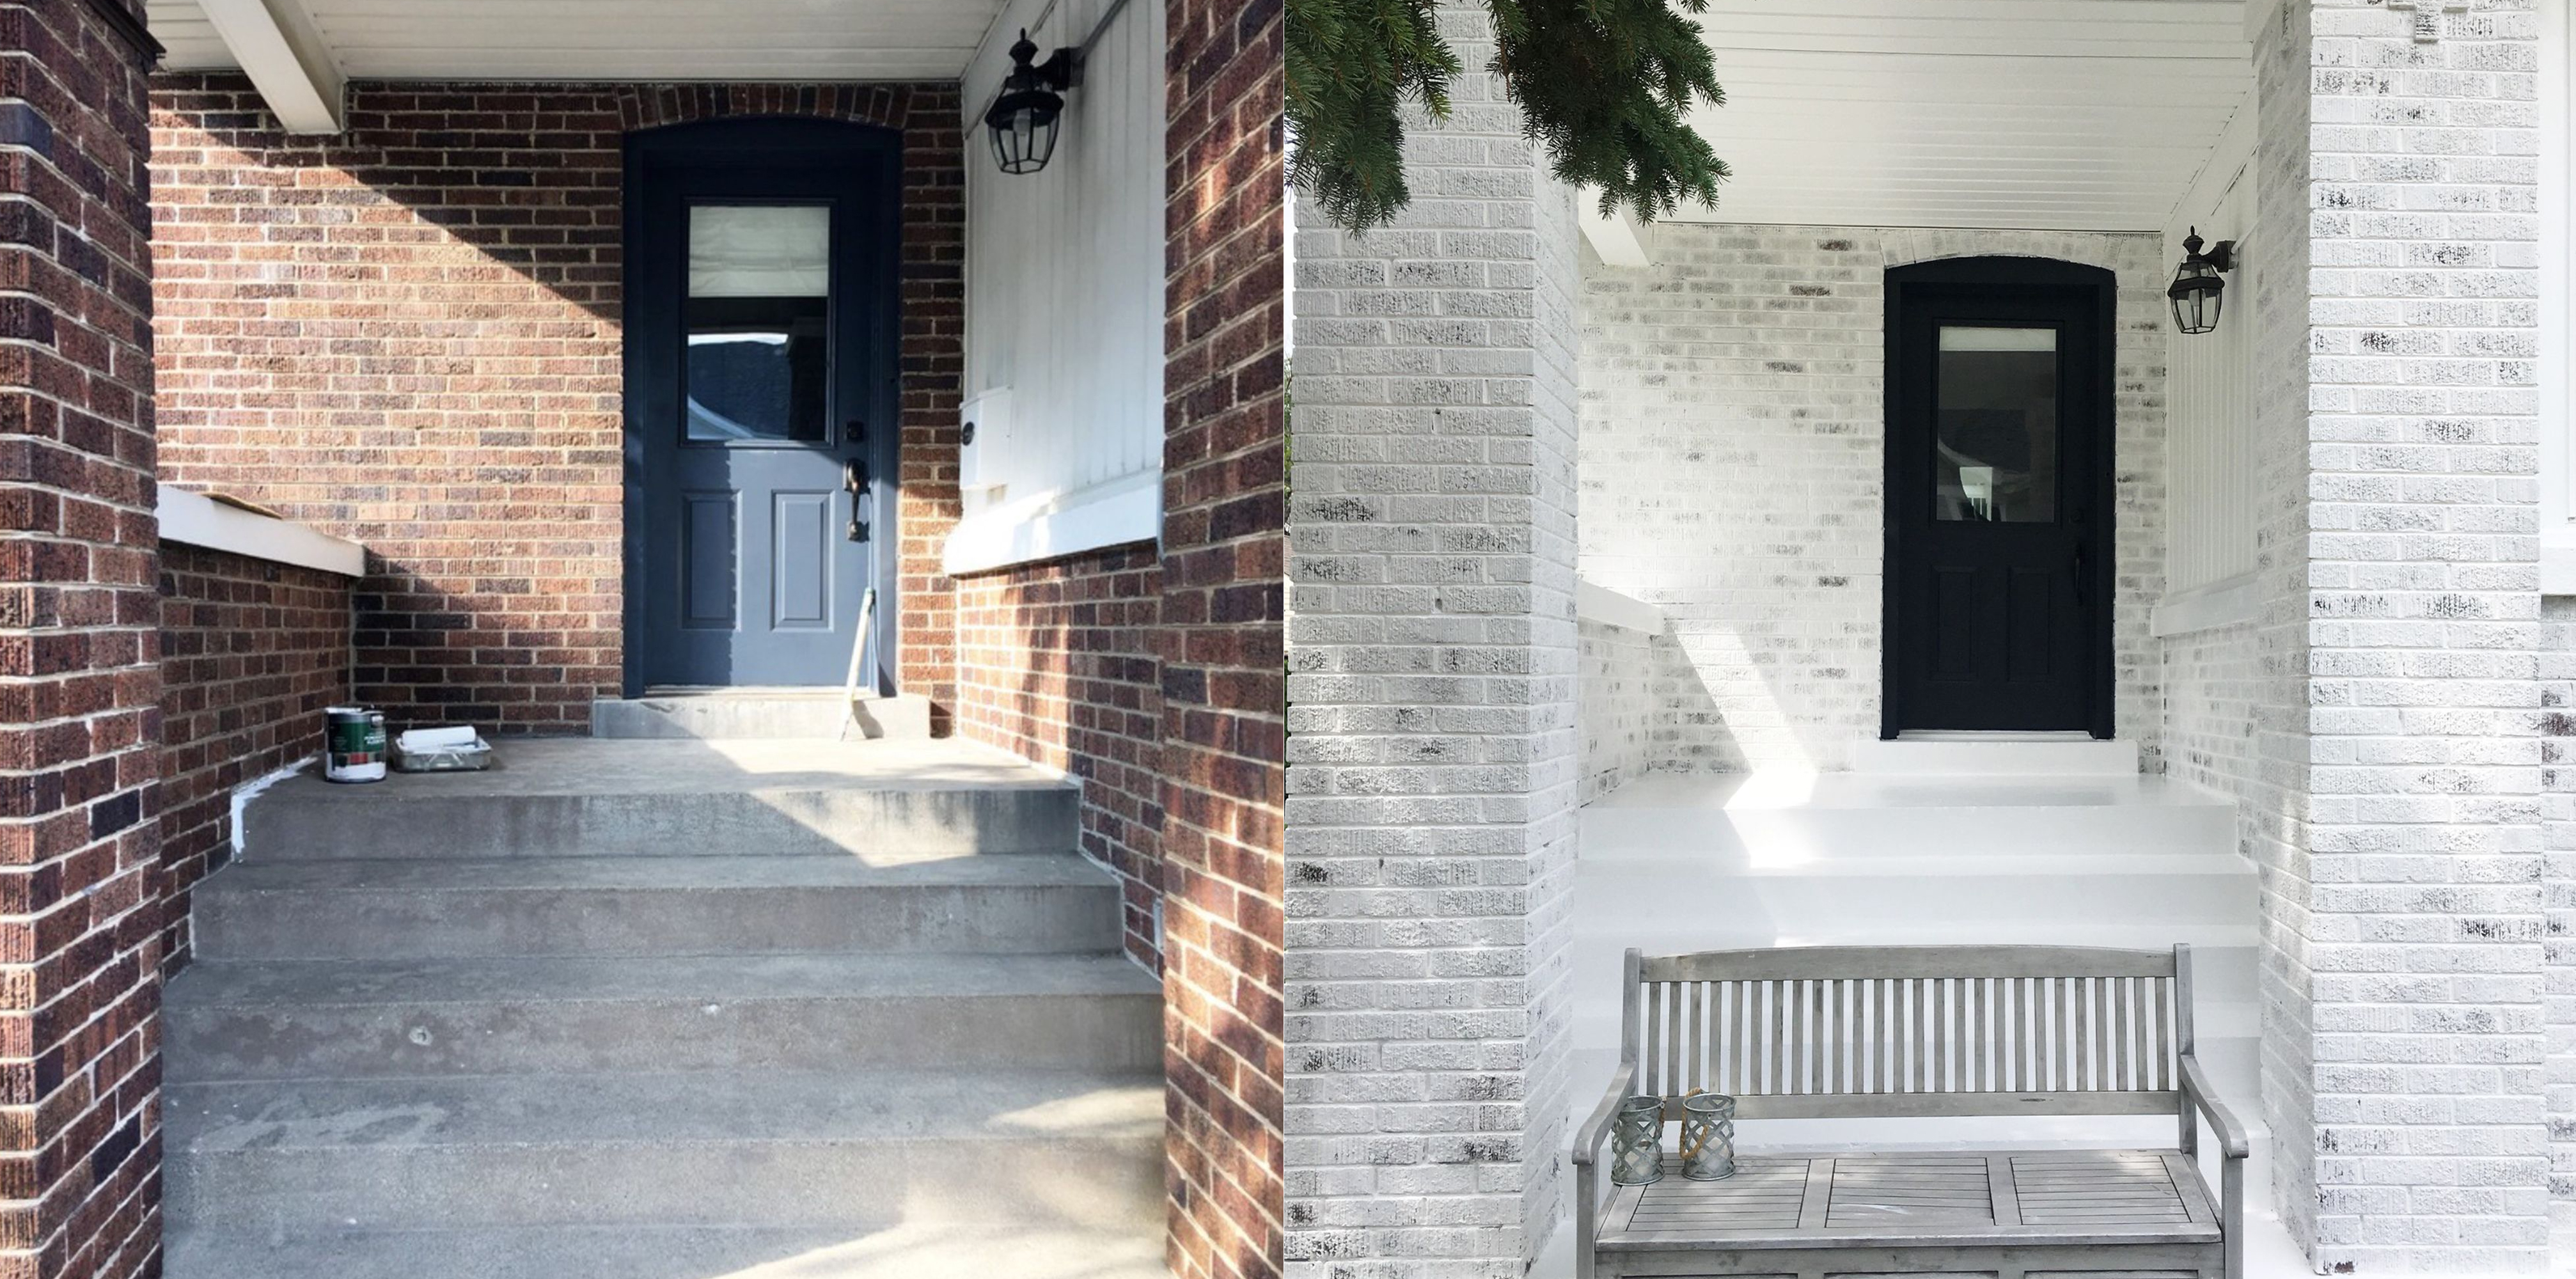 Front porch makeover using Romabio Limewash in Bianco White